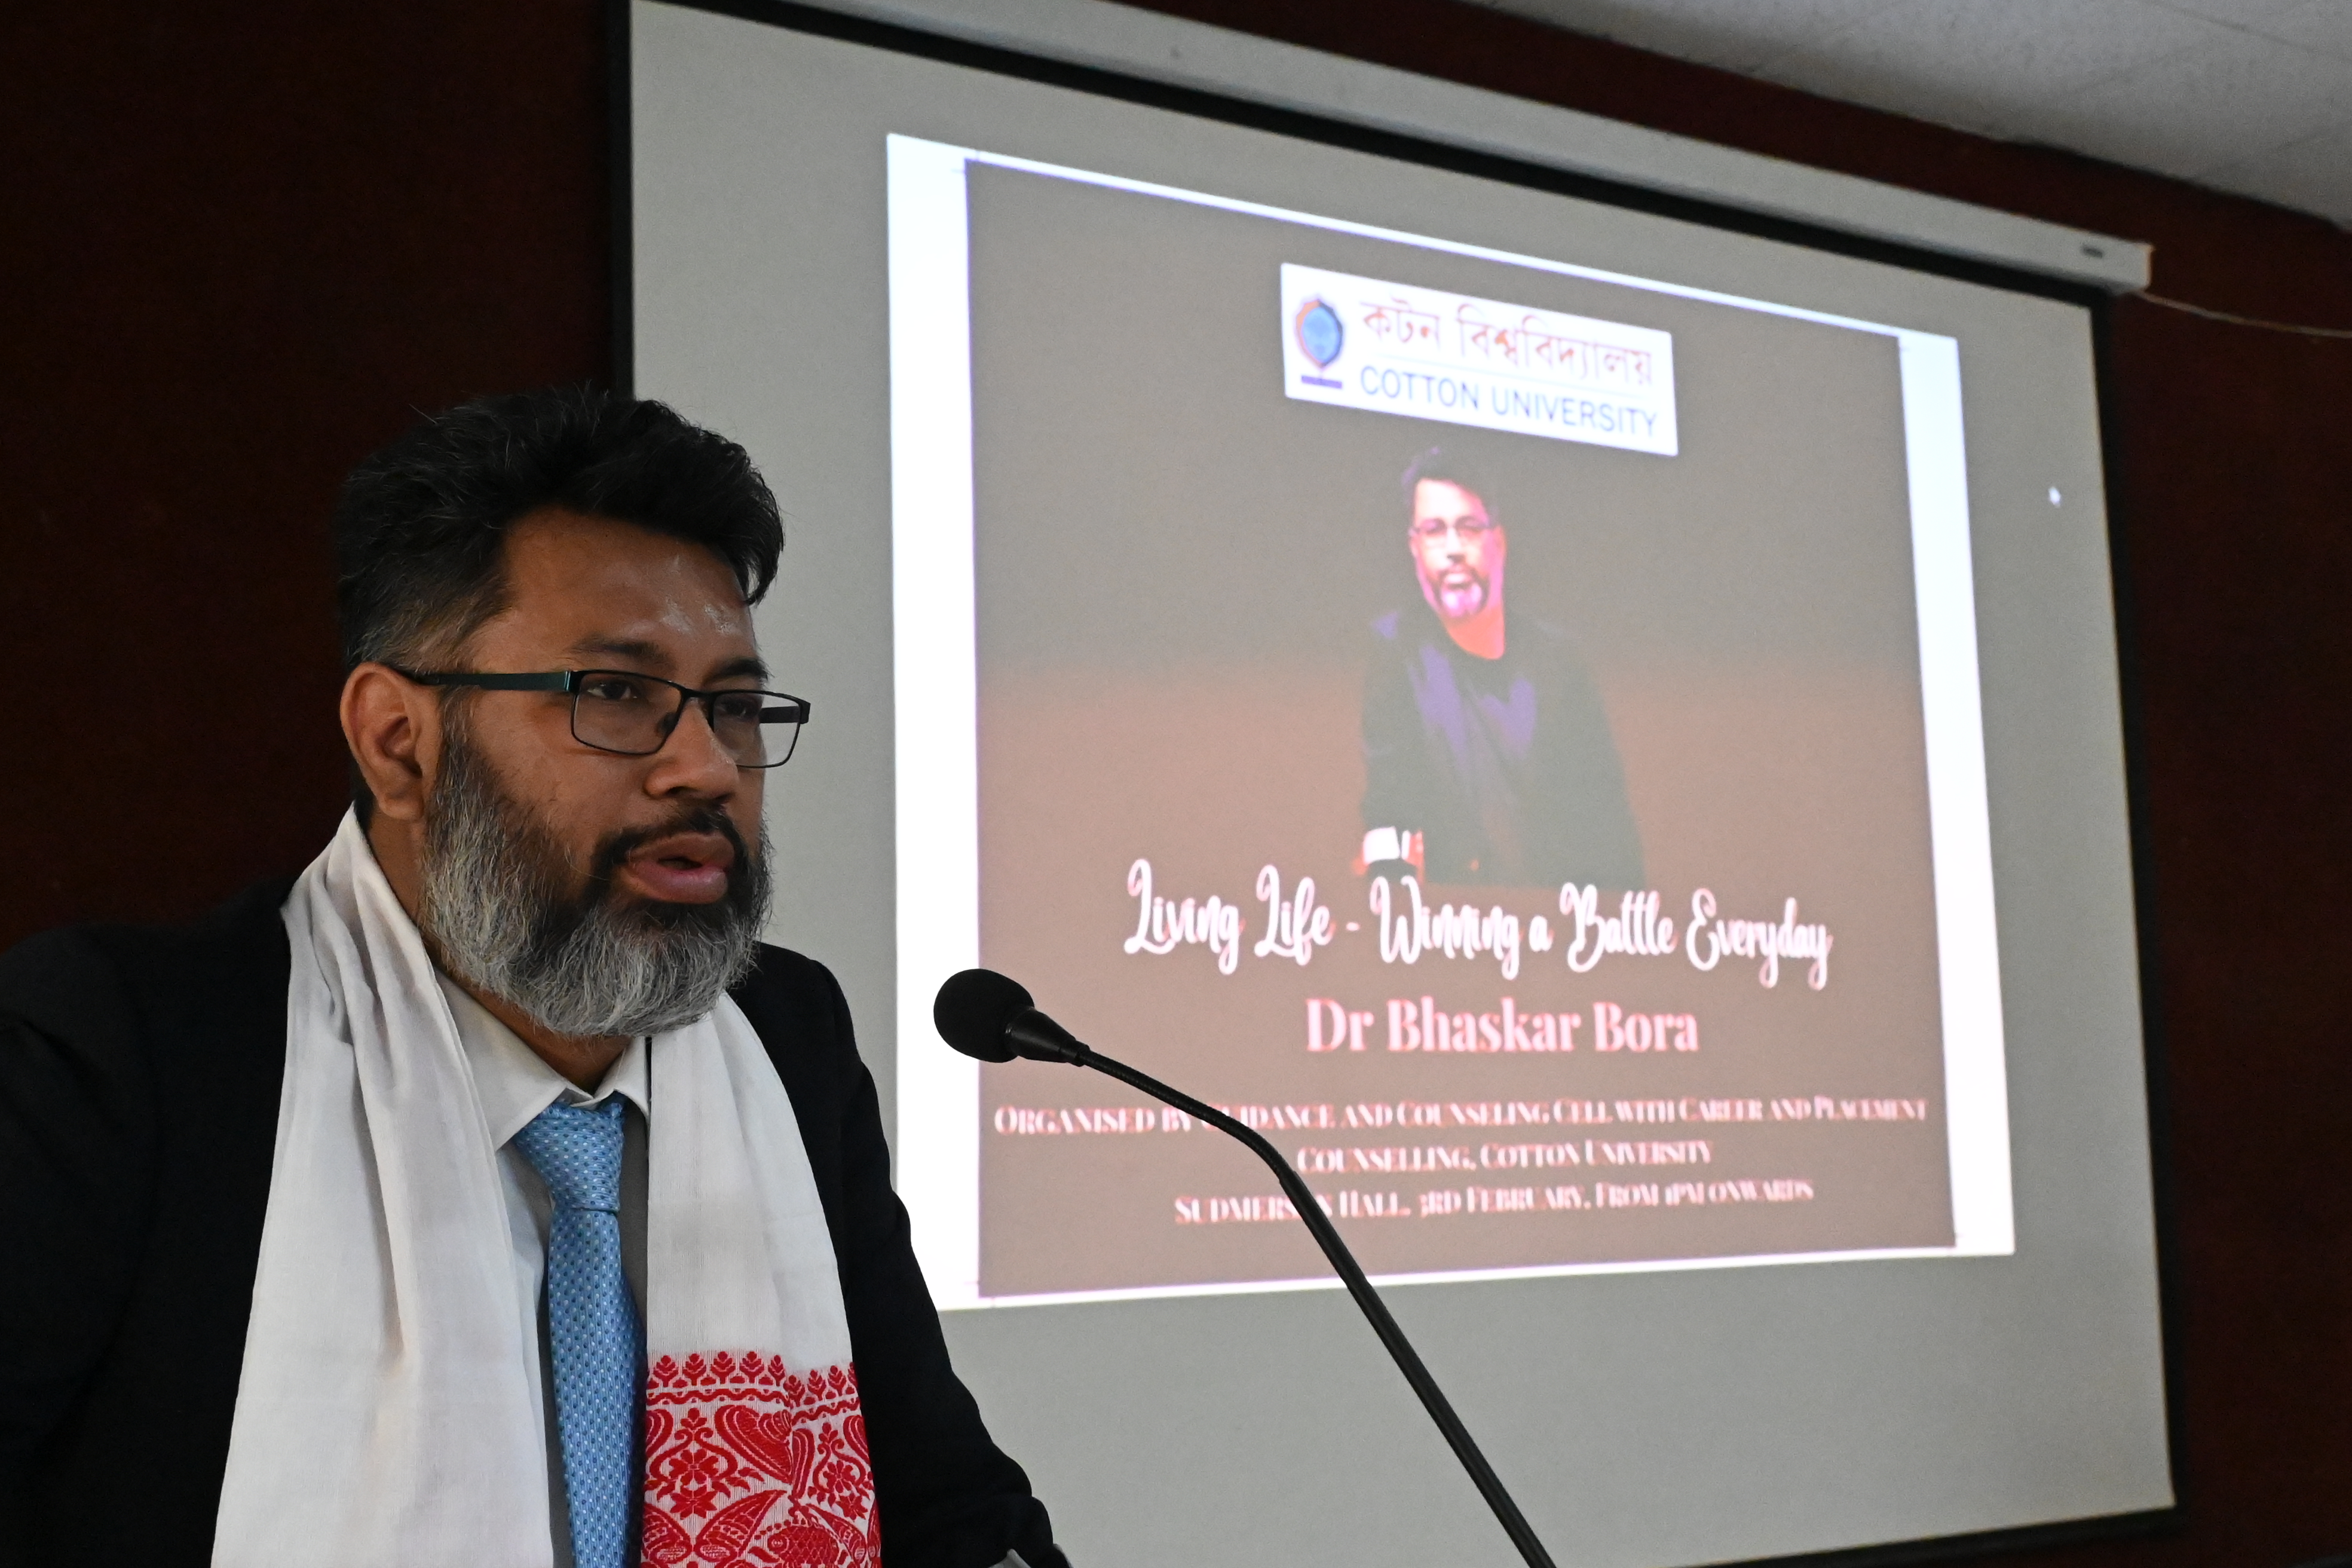 A talk by Dr Bhaskar Bora :  Living Life - Winning One Battle Everyday.